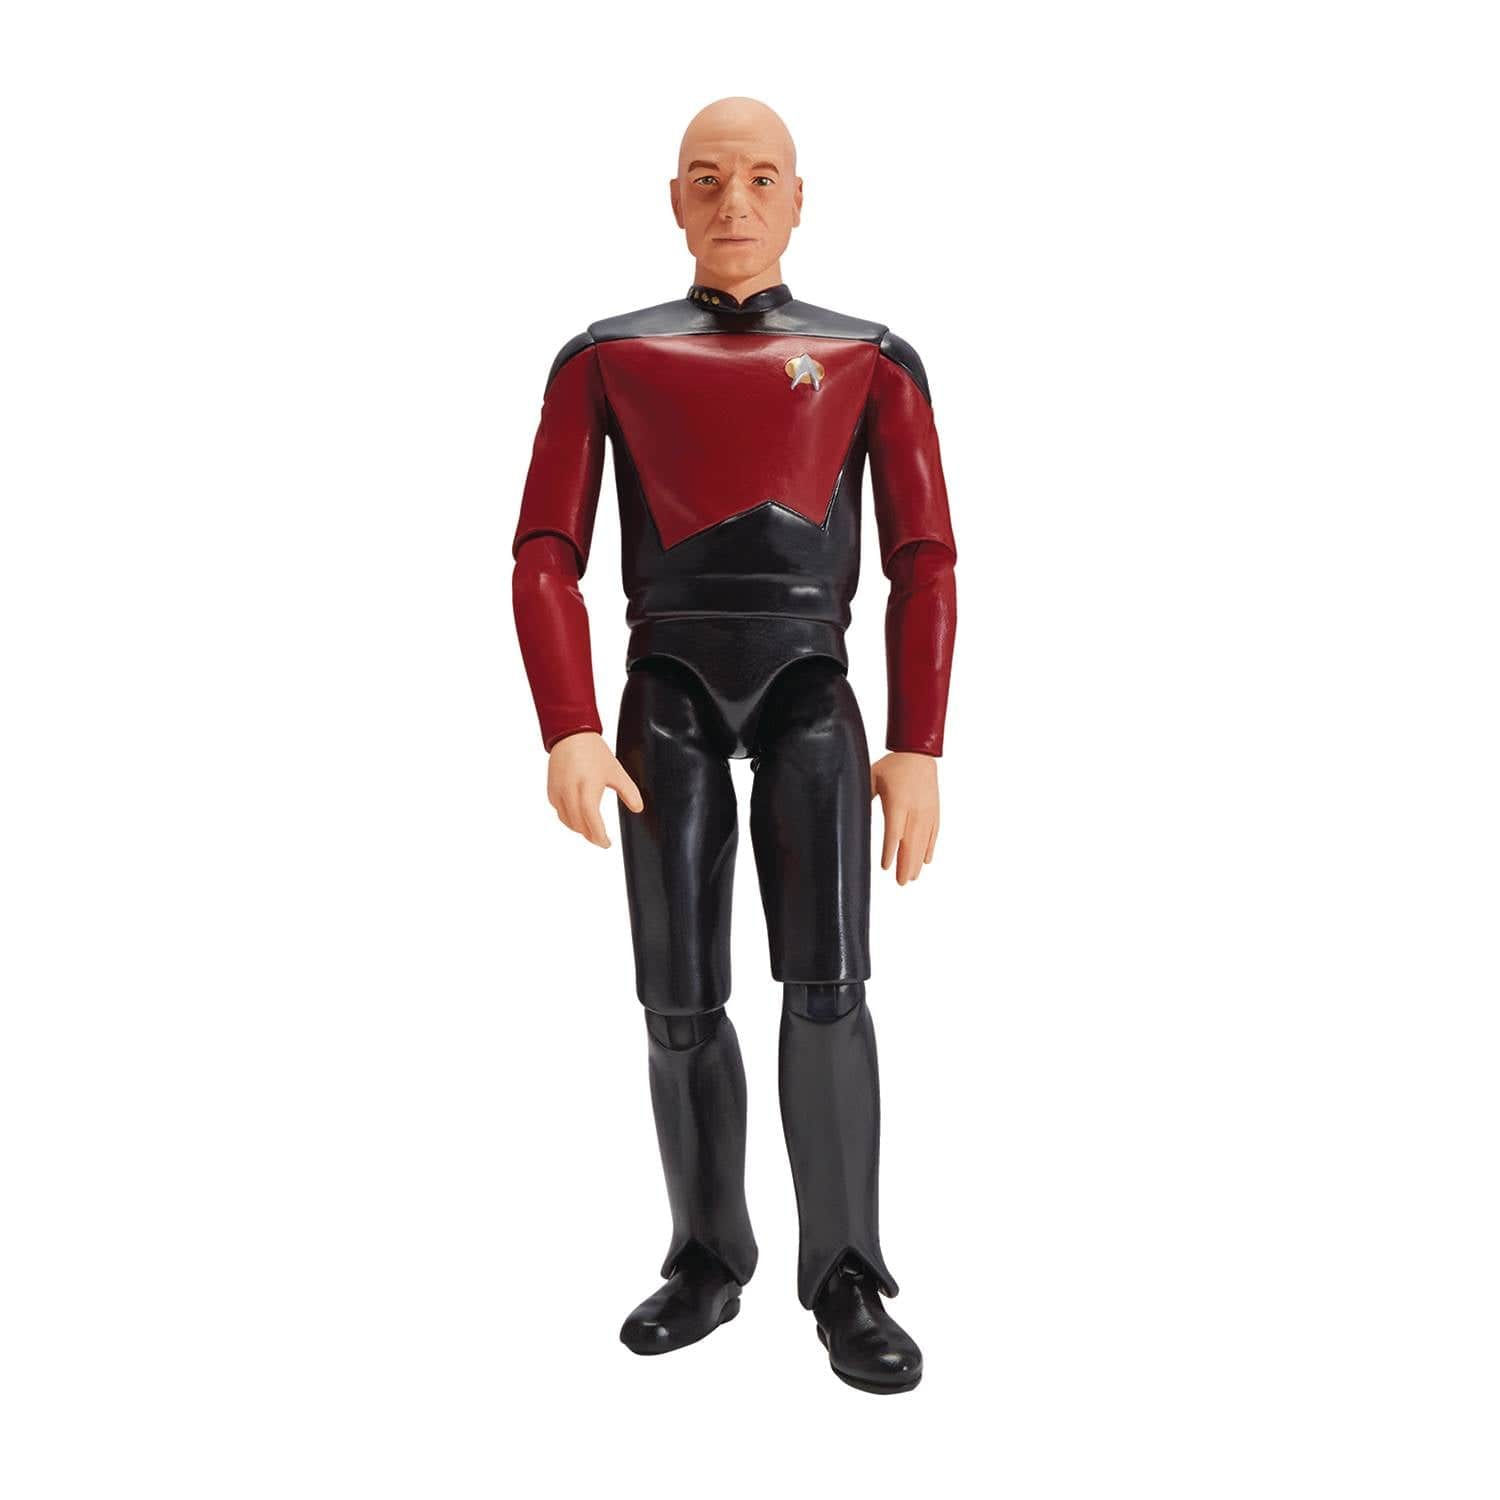 Playmates Toys: Star Trek - Captain Jean-Luc Picard (Next Generation) - Third Eye